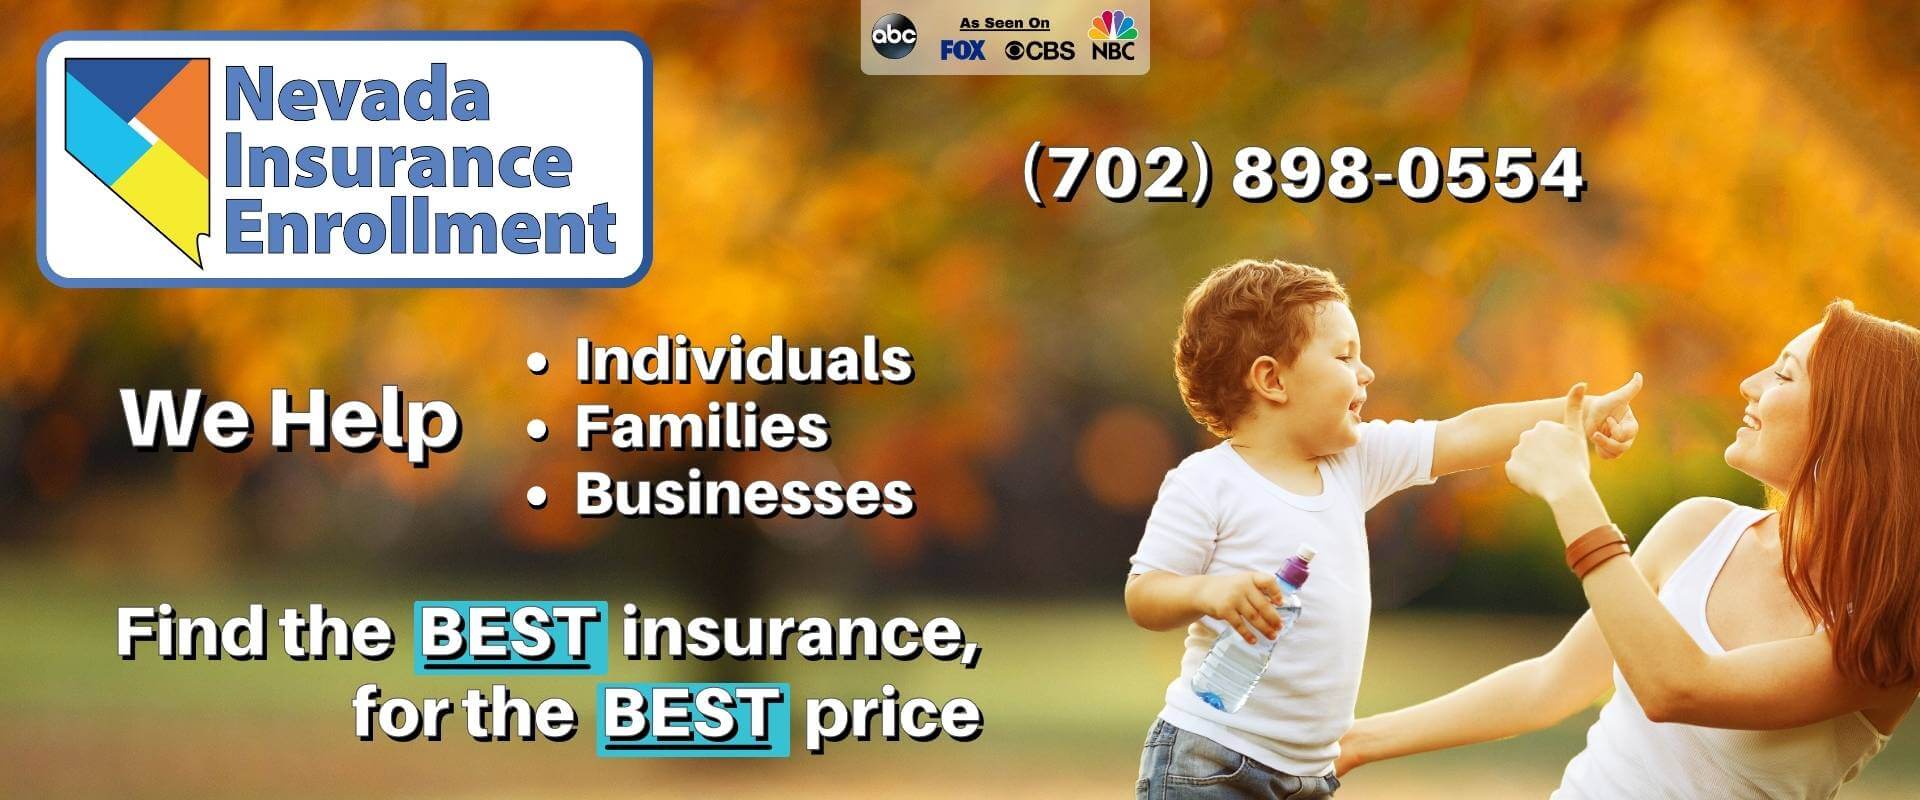 Nevada Insurance Enrollment - MAIN page image